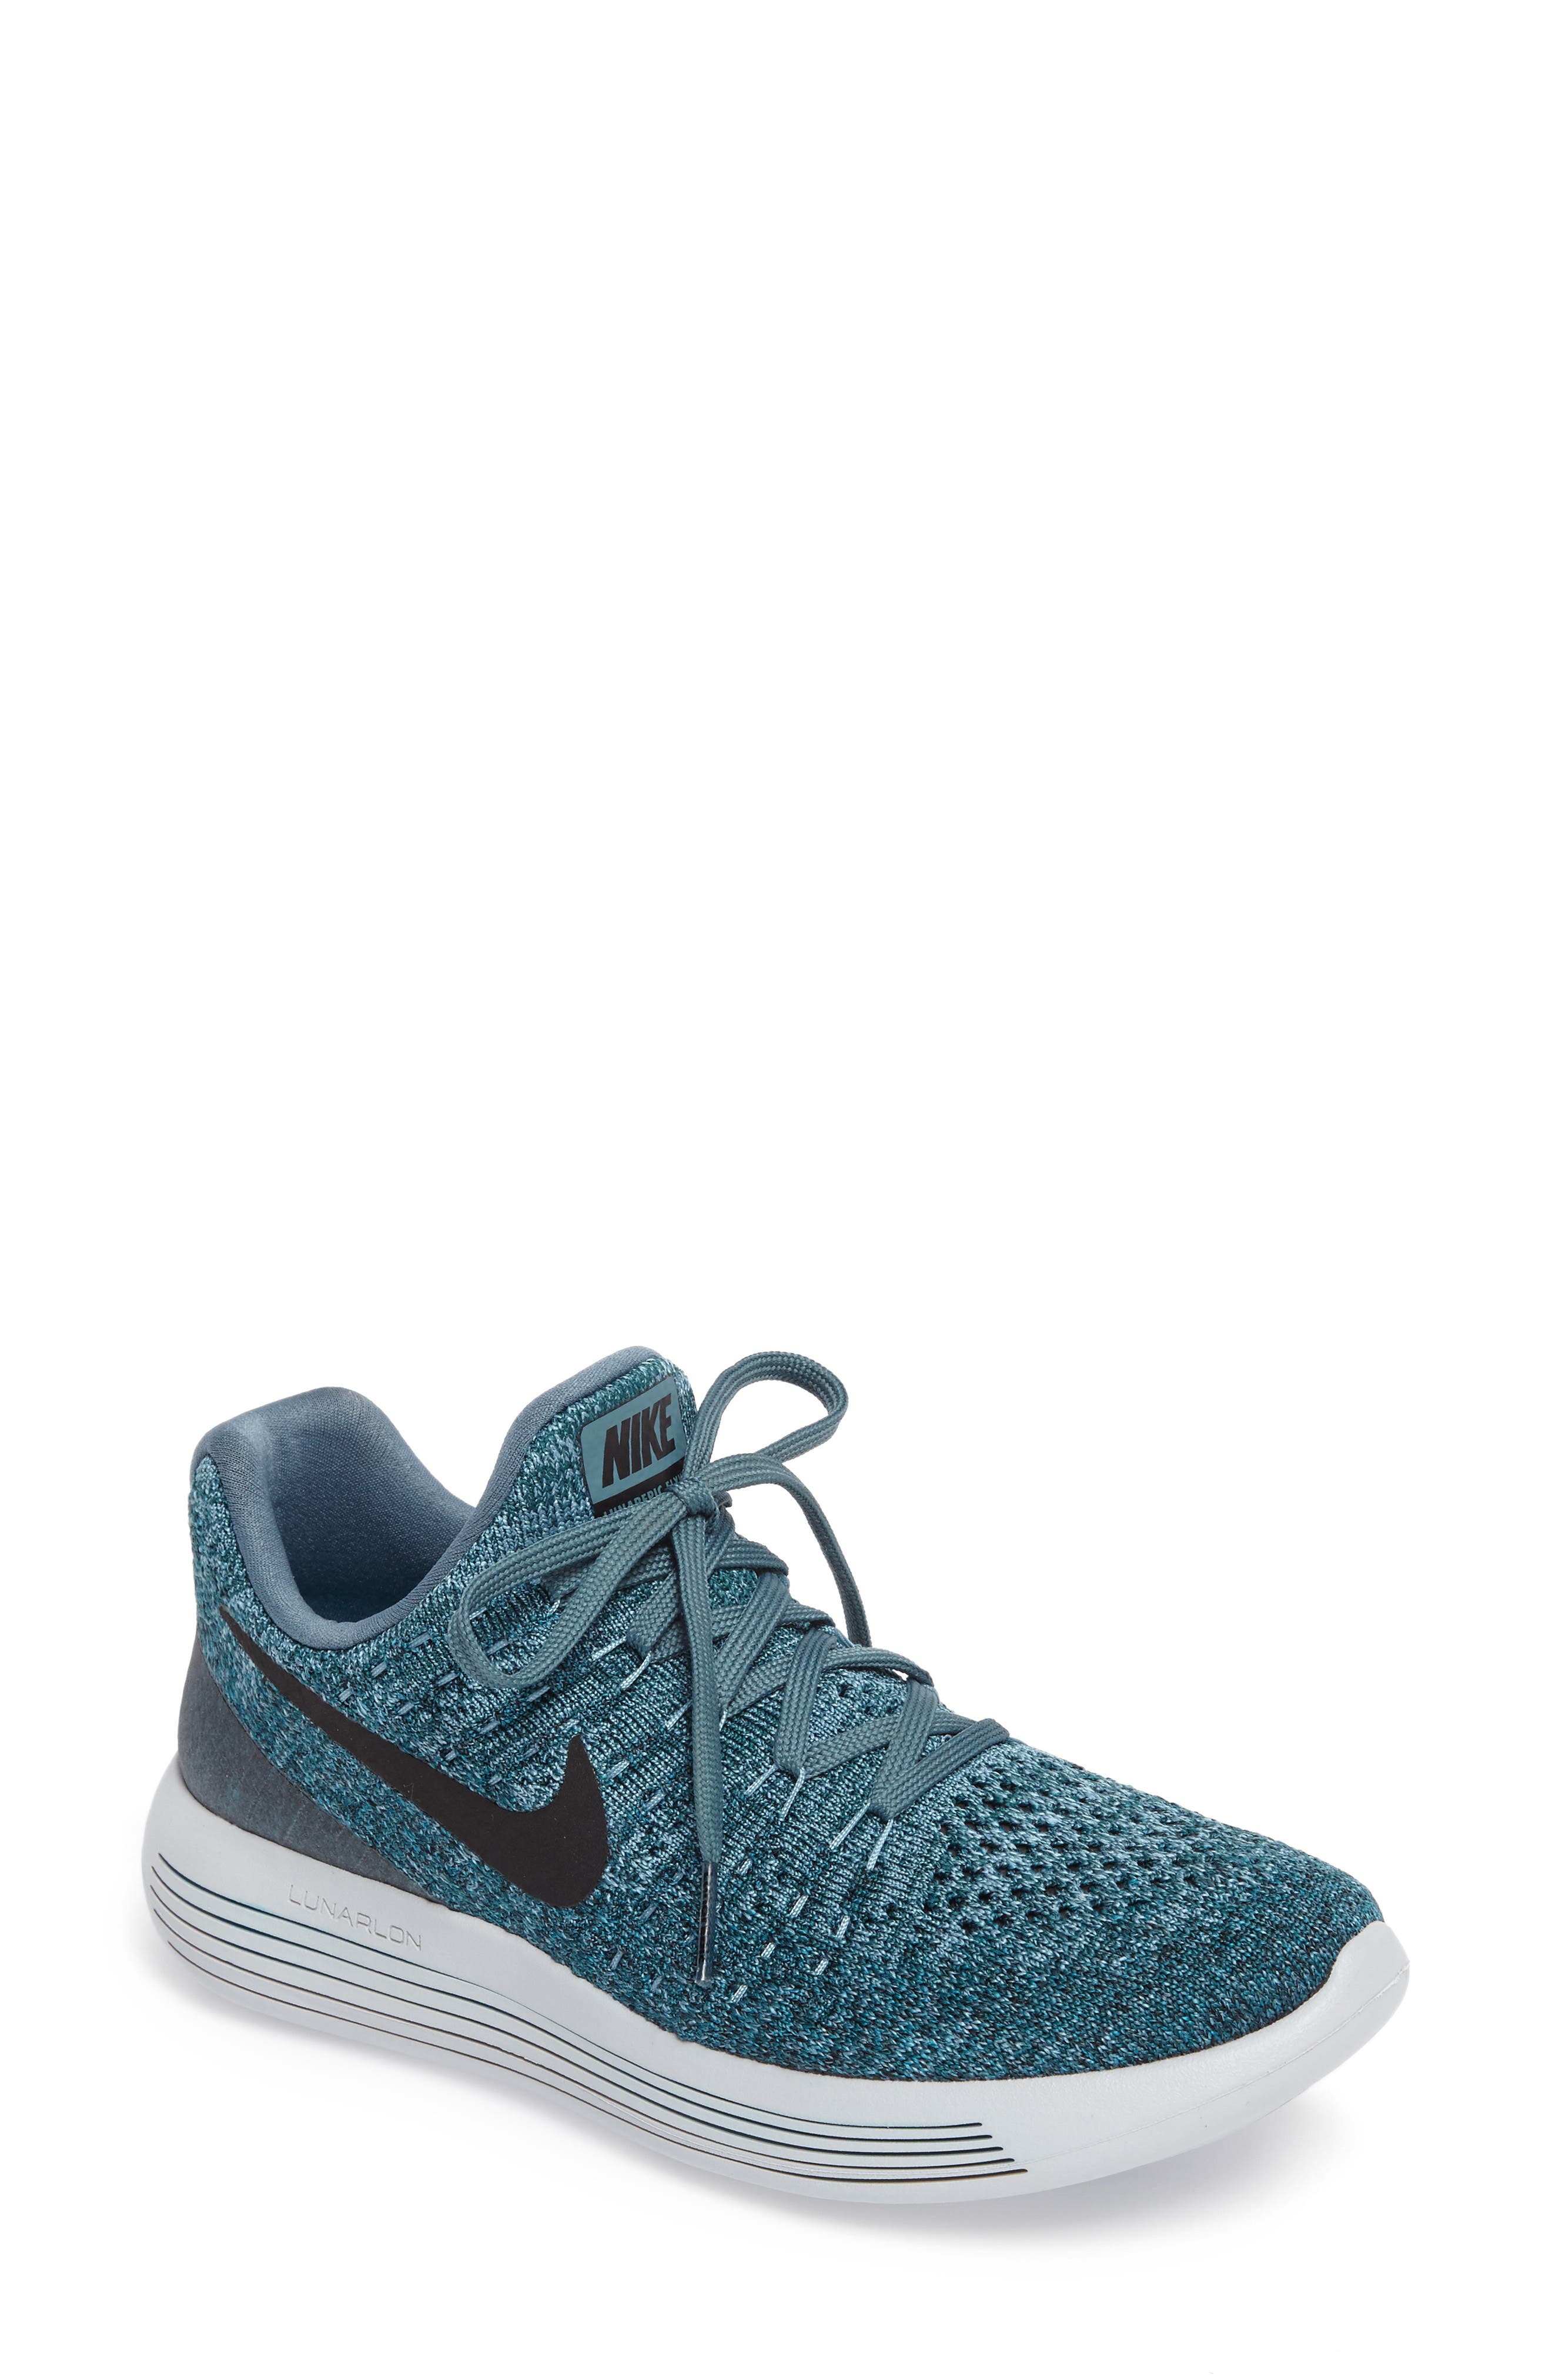 Nike LunarEpic Low Flyknit 2 Running Shoe (Women)